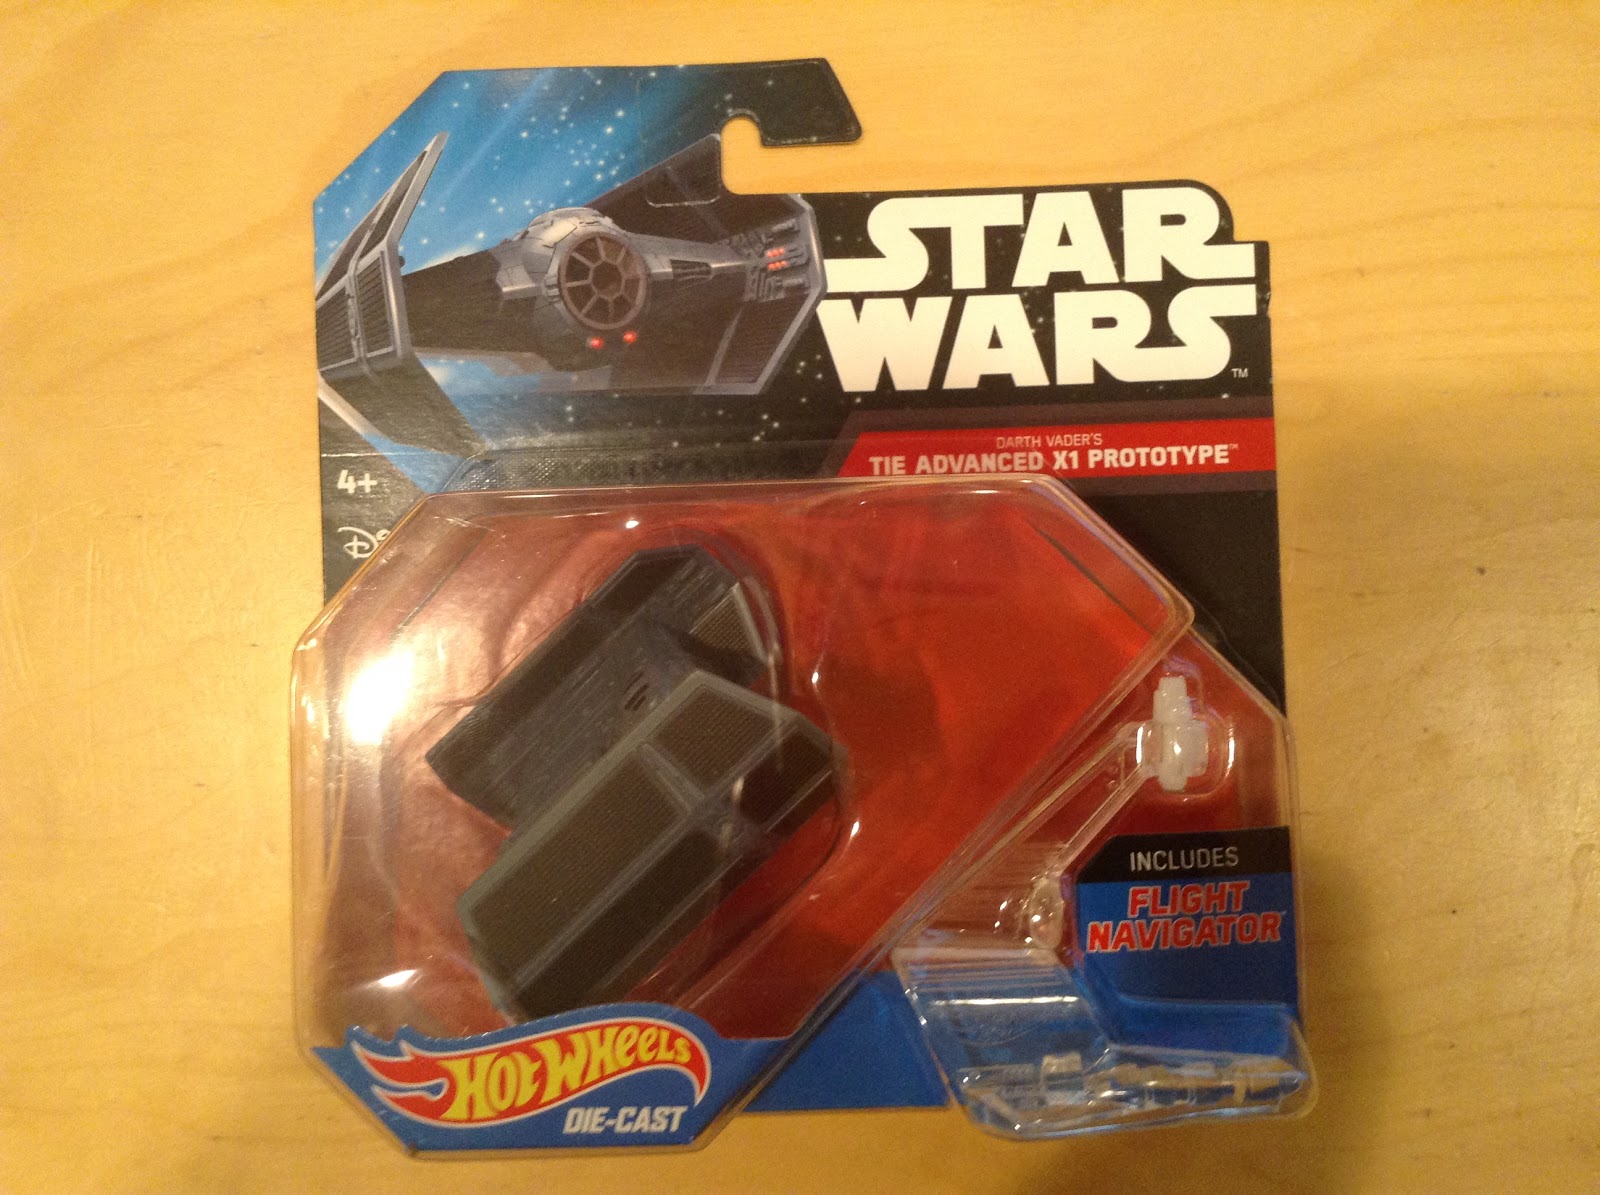 Julian's Hot Wheels Blog: Darth Vader's Tie Advanced X1 Prototype (Star Wars Starship)